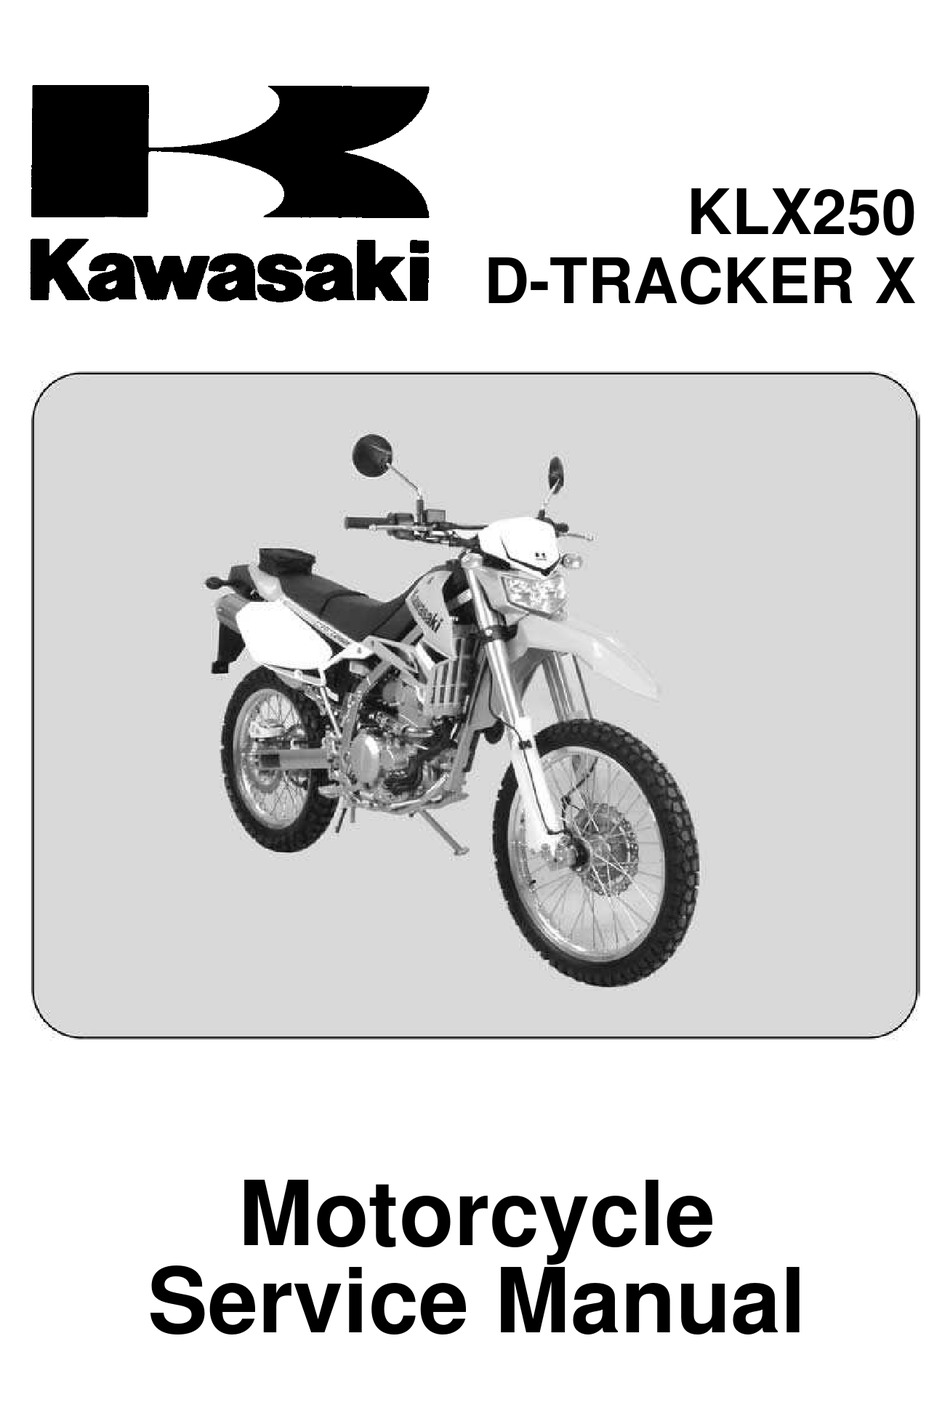 KAWASAKI KLX250 X SERVICE MANUAL Pdf Download | ManualsLib